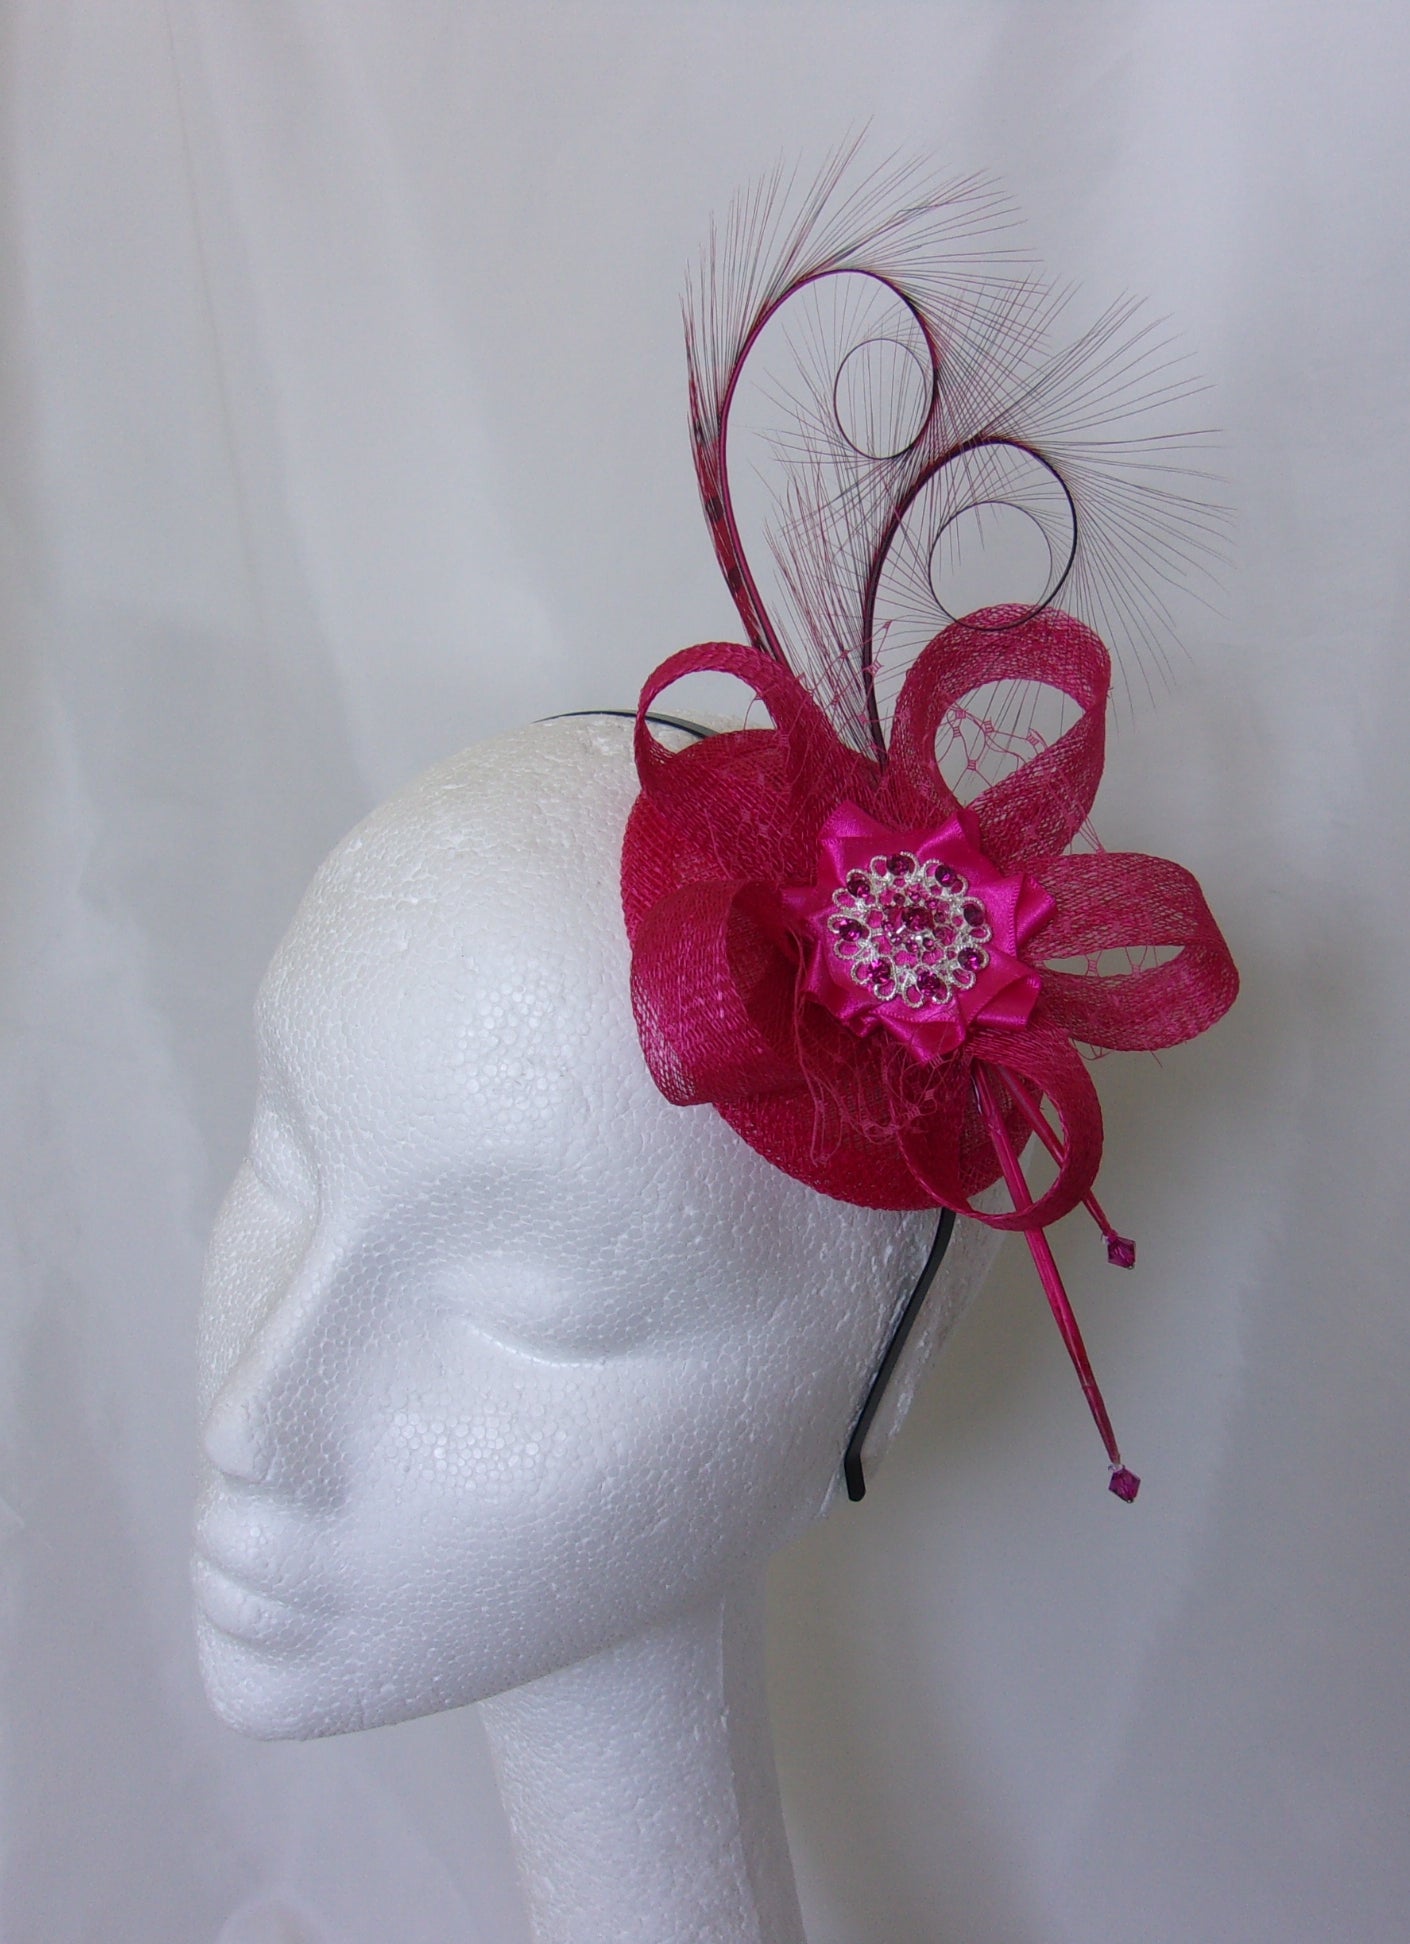 Cerise Pink Fascinator Bright Hot Fuchsia Pinks - Curl Feather Sinamay Loop Pearls or Rhinestone Wedding Mini Hat Headpiece - Made to Order